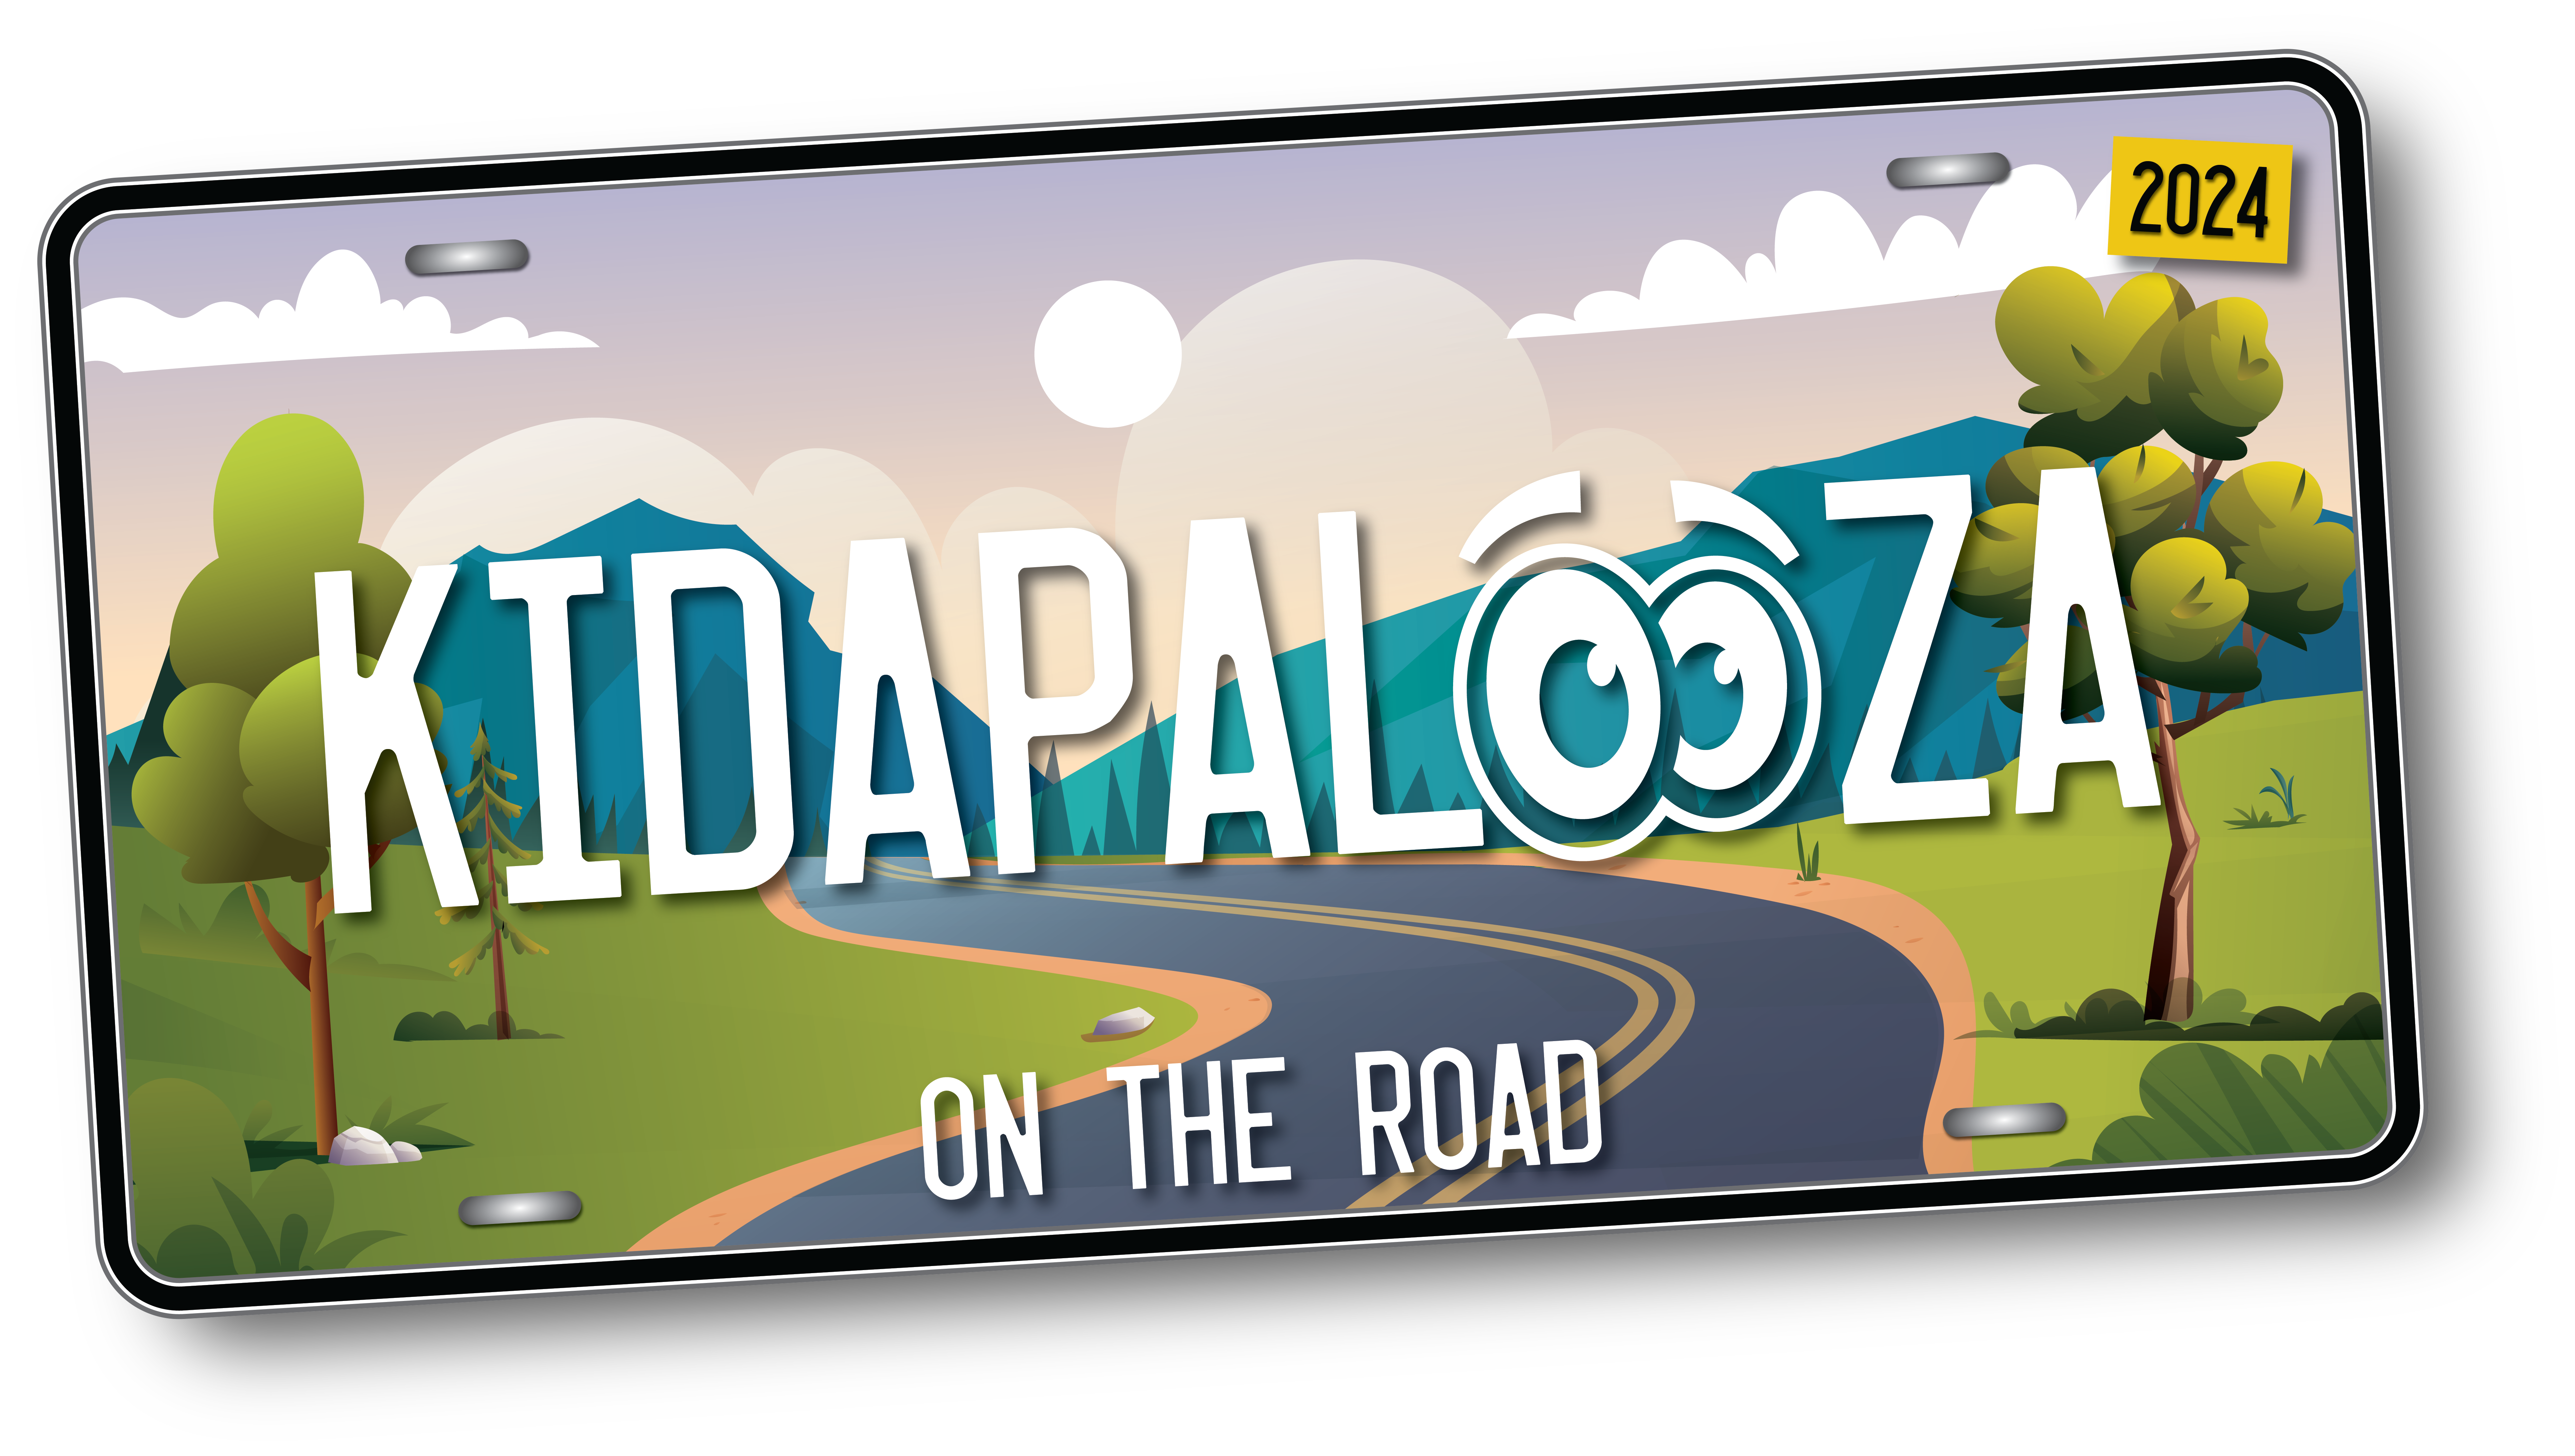 Kidapalooza On The Road - 2024 (License Plate Image)